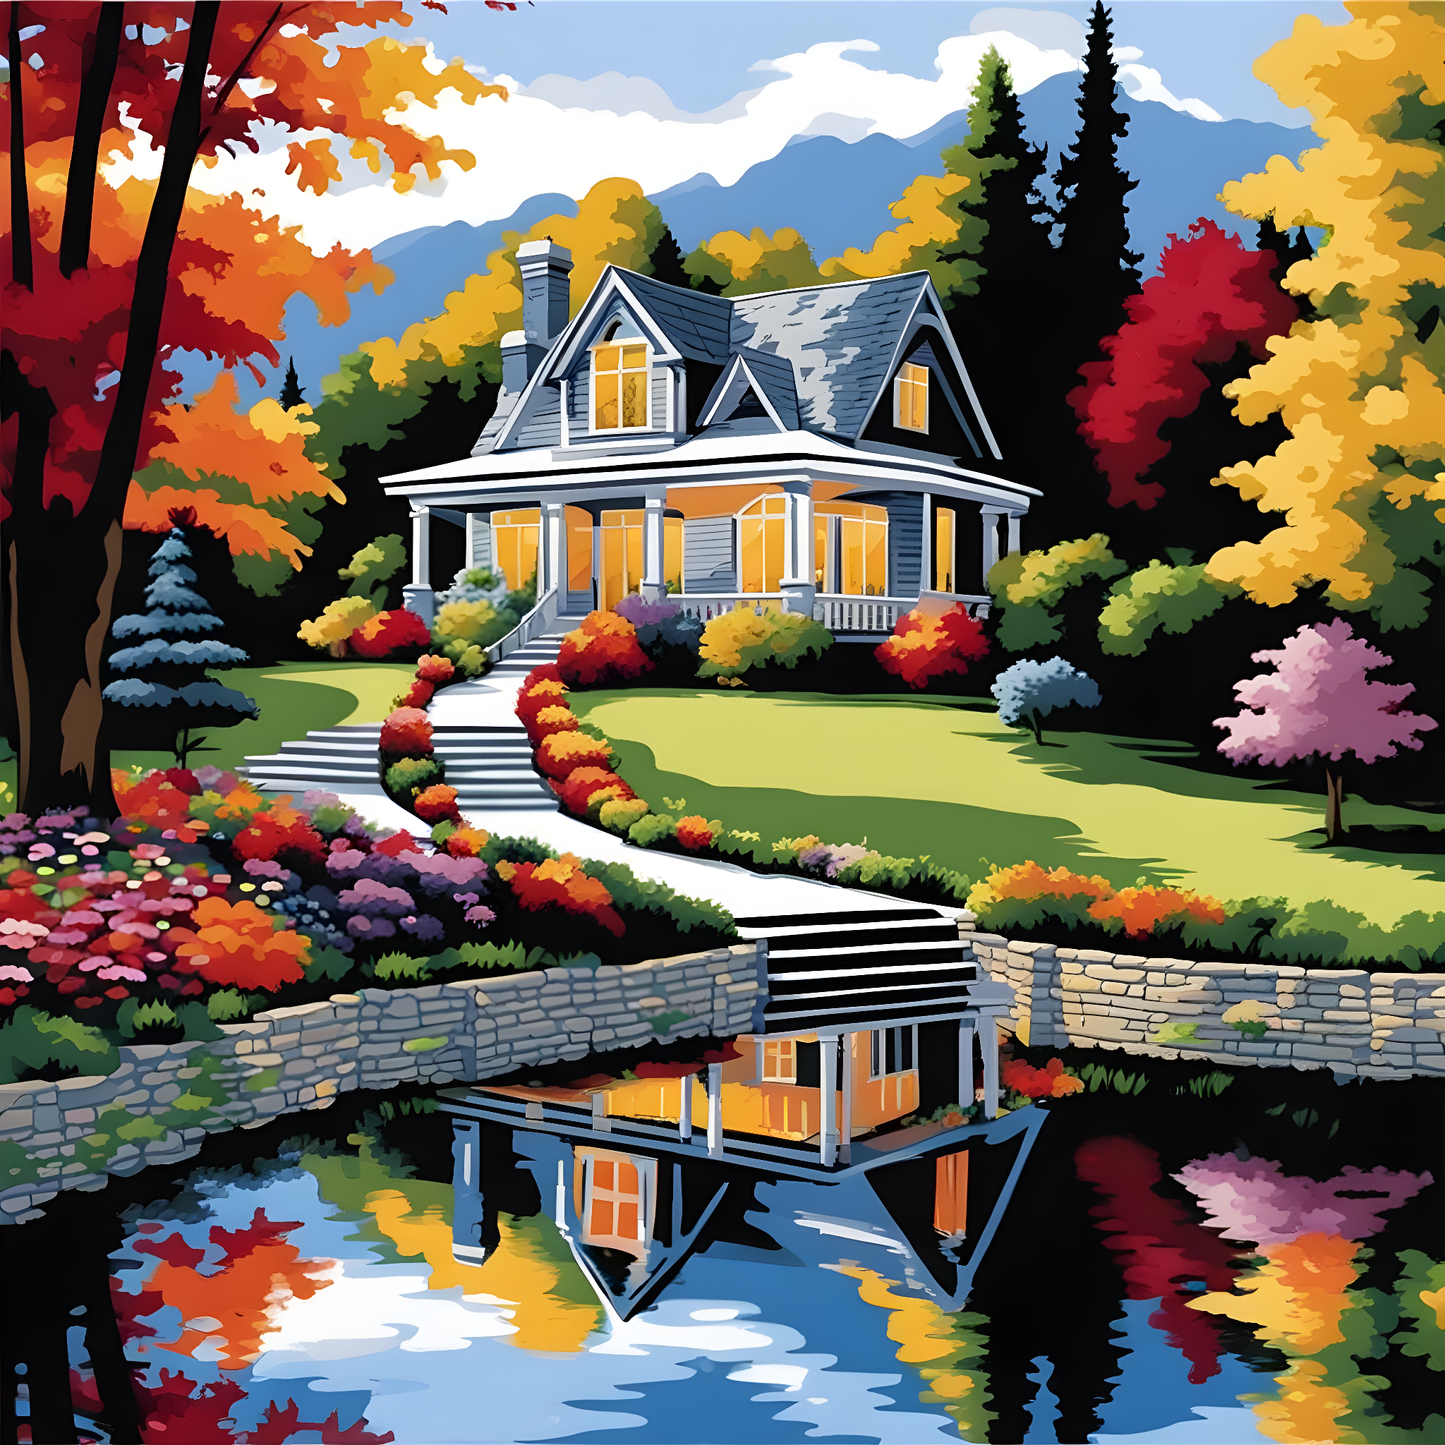 Lakeside Garden House Landscape - Van-Go Paint-By-Number Kit